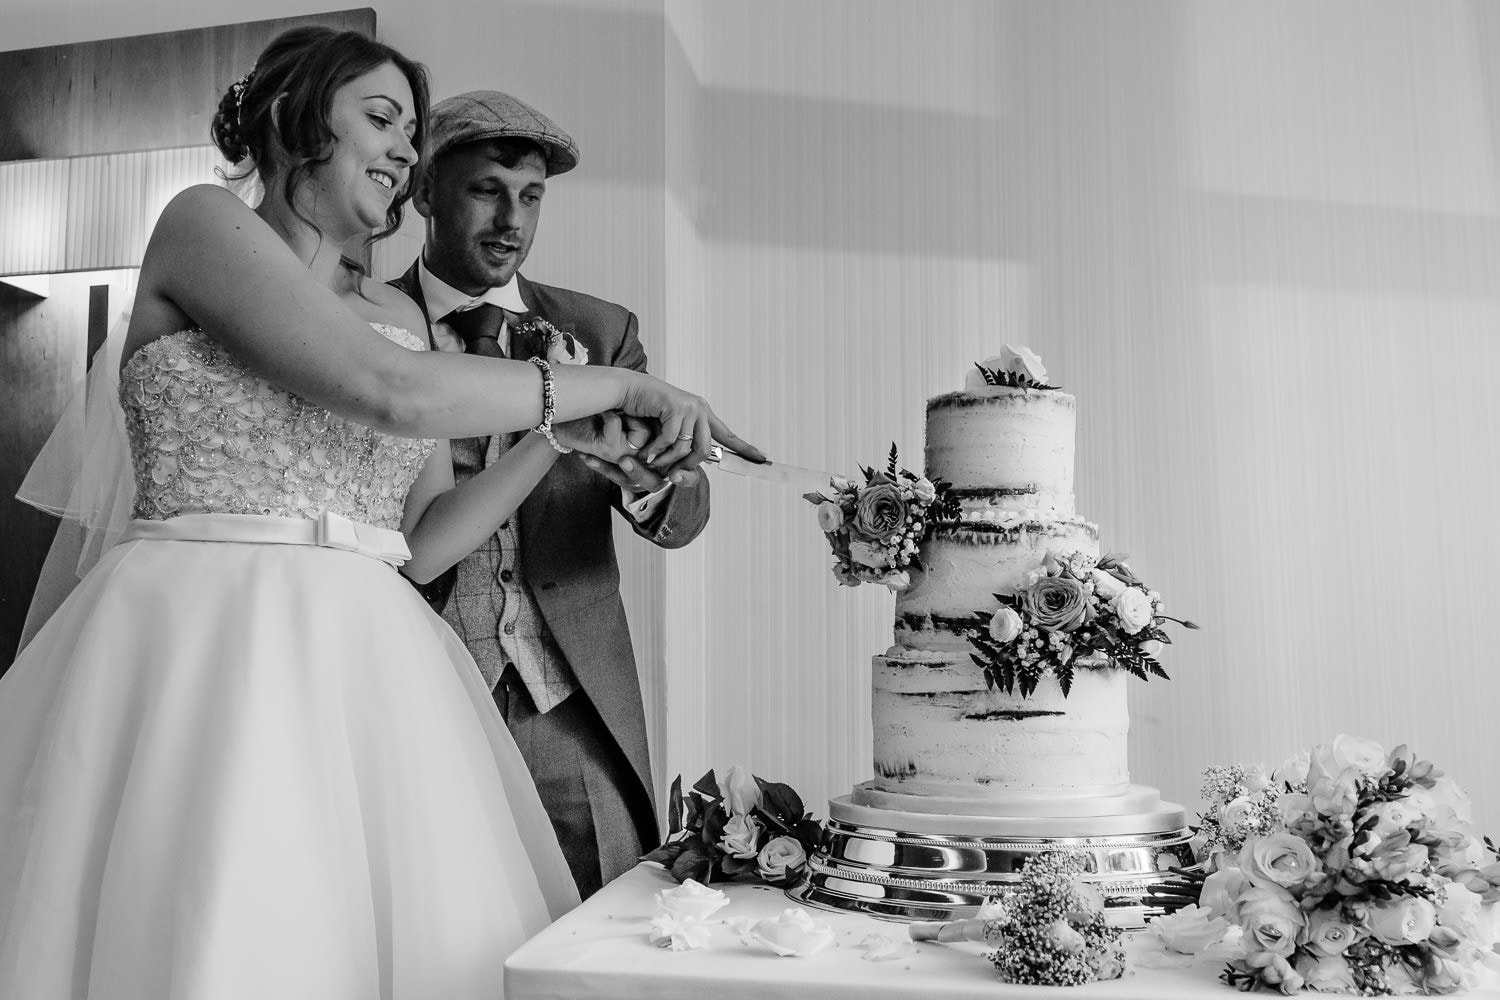 wedding day cake cutting at chesford grange hotel